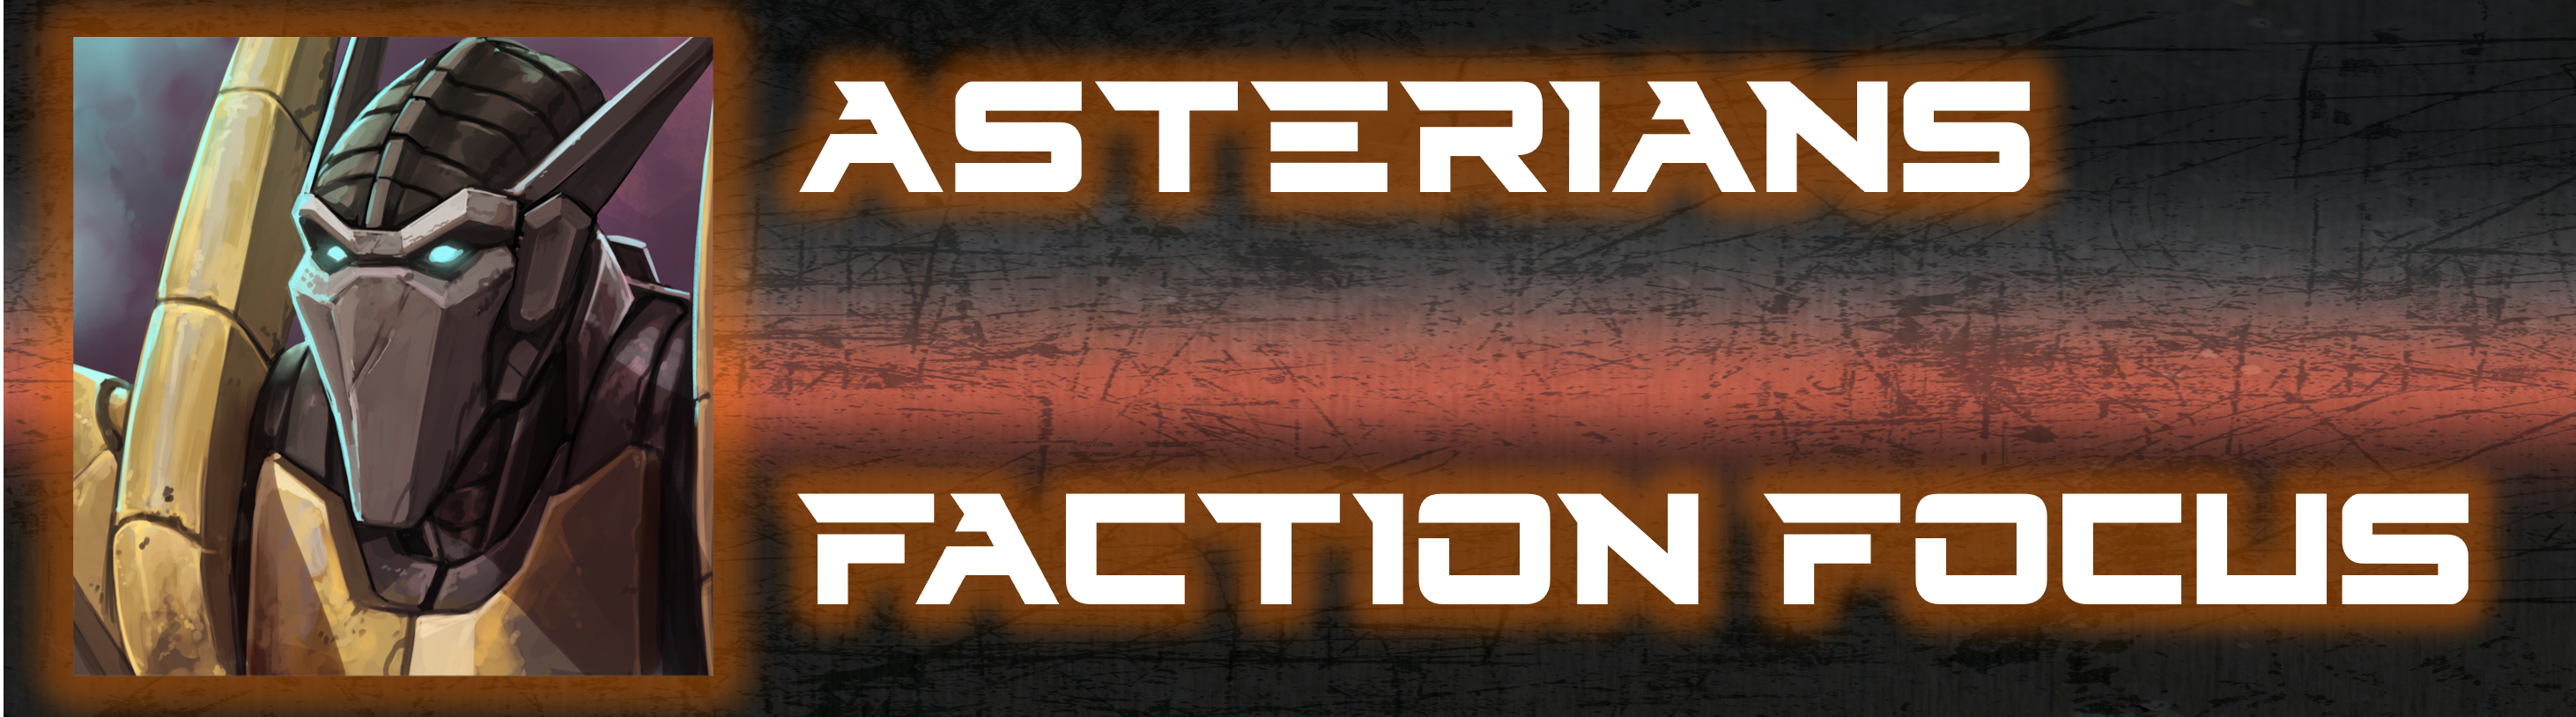 Asterians Faction Focus